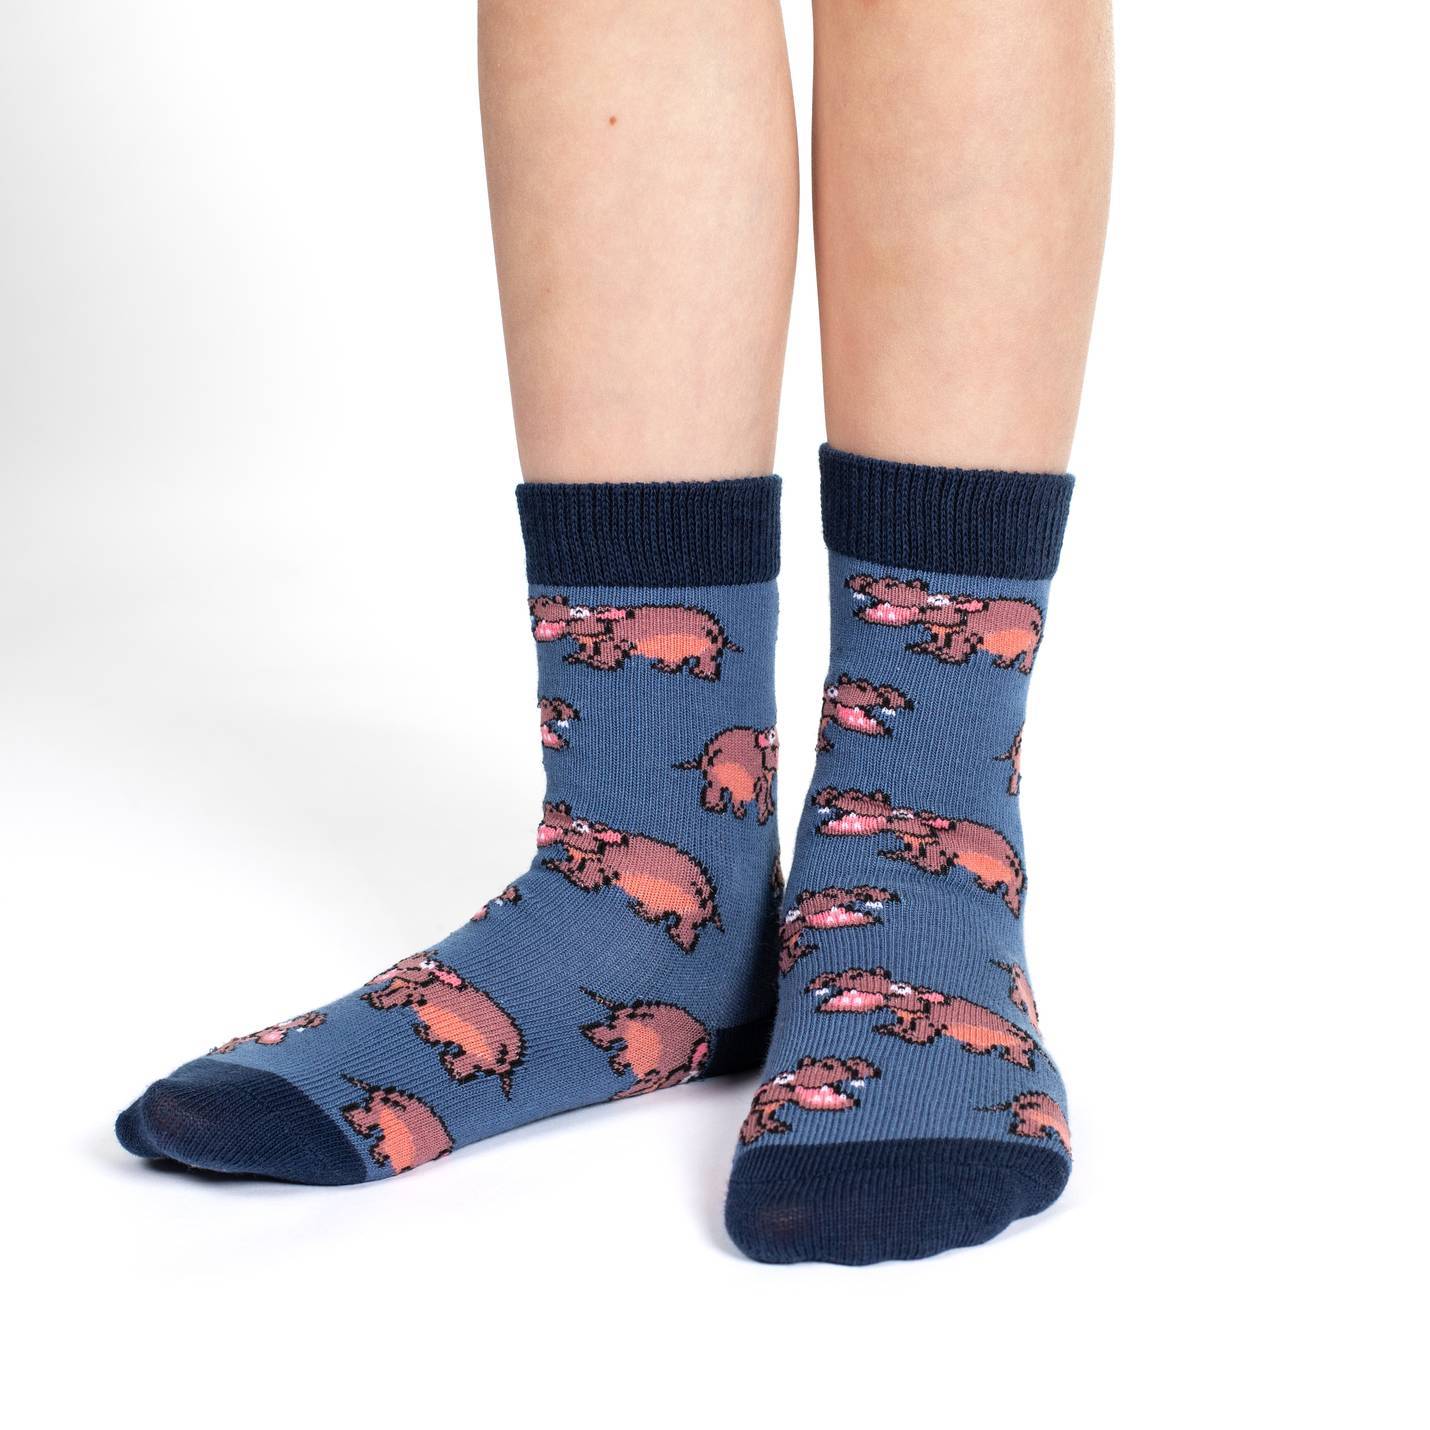 Hippopotamus, Crocodiles, and Dinosaurs Baby/Kids Socks 3pk